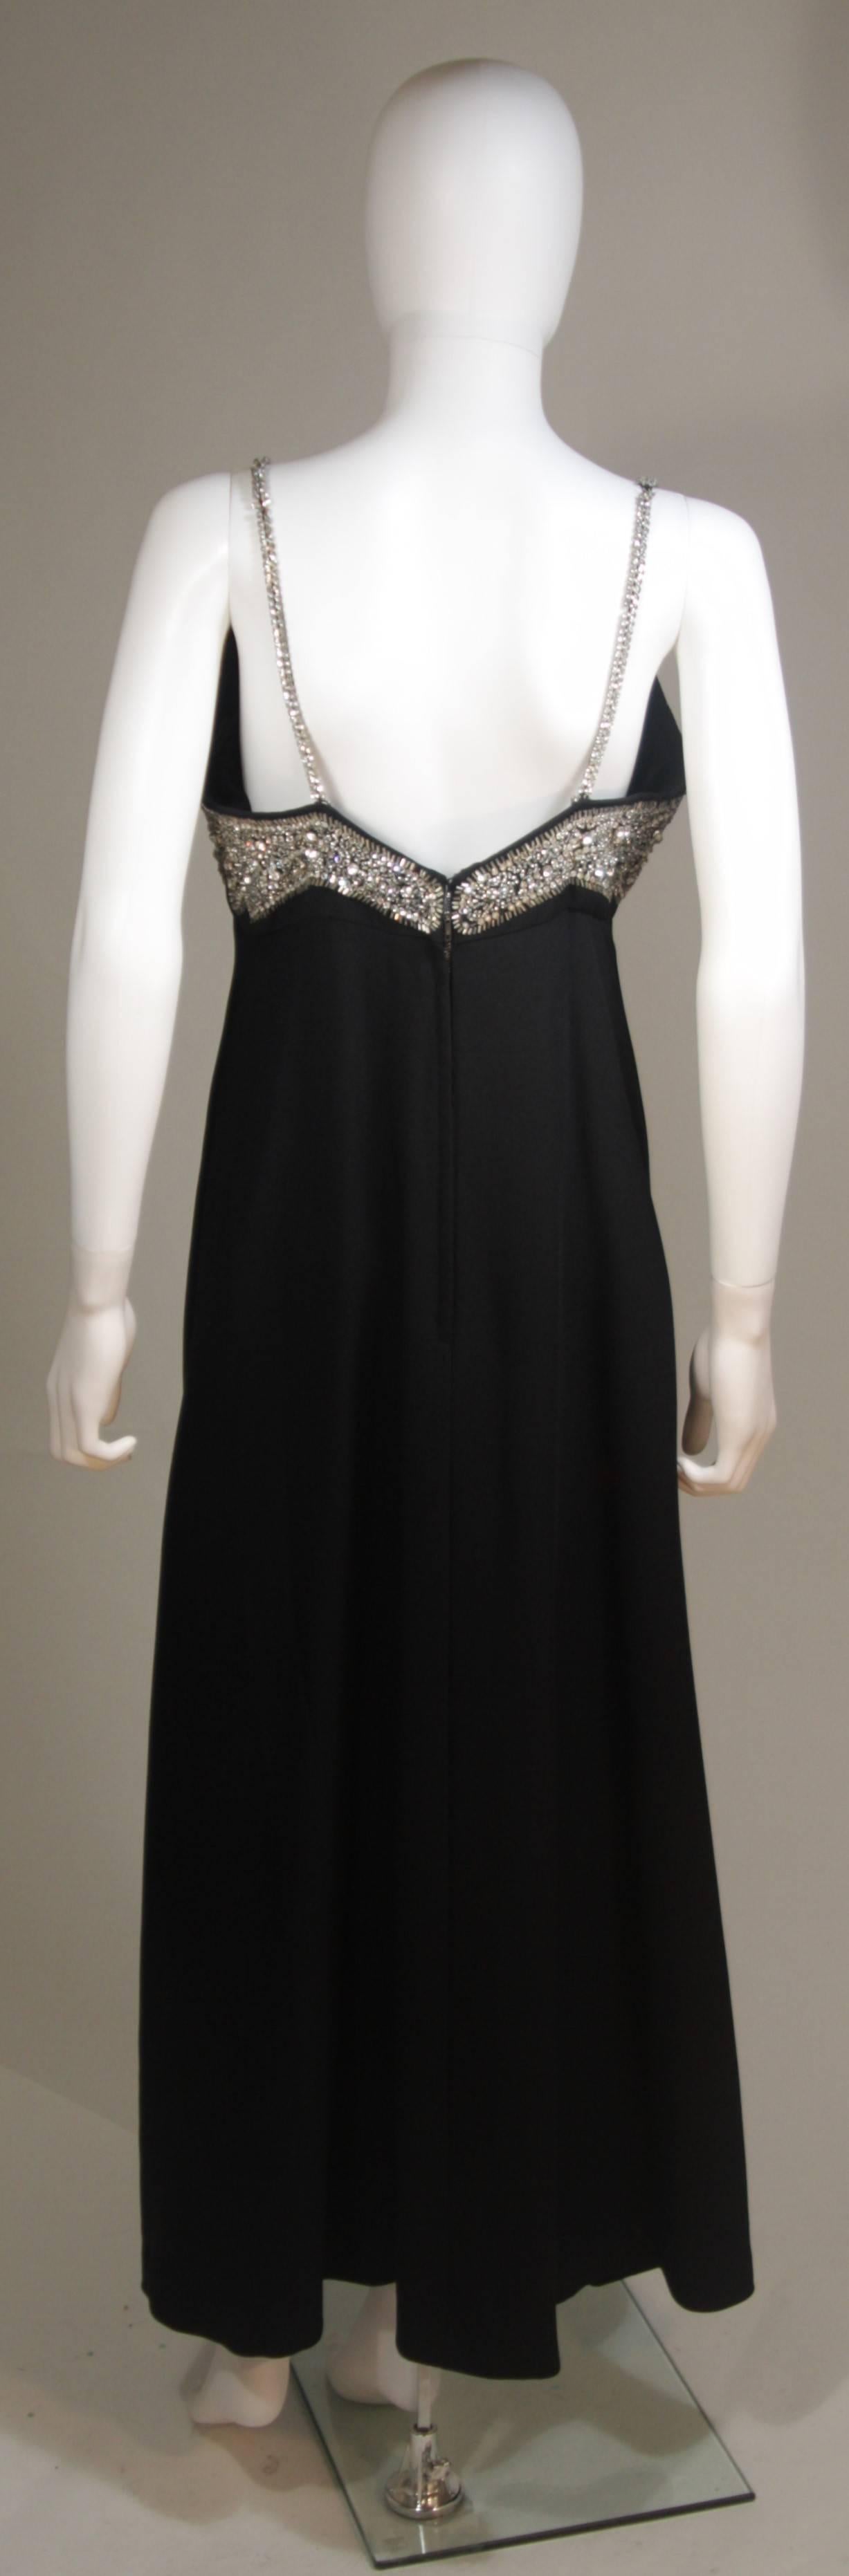 Vintage Custom Black Jewel Encrusted Gown Size 8-10 For Sale 3